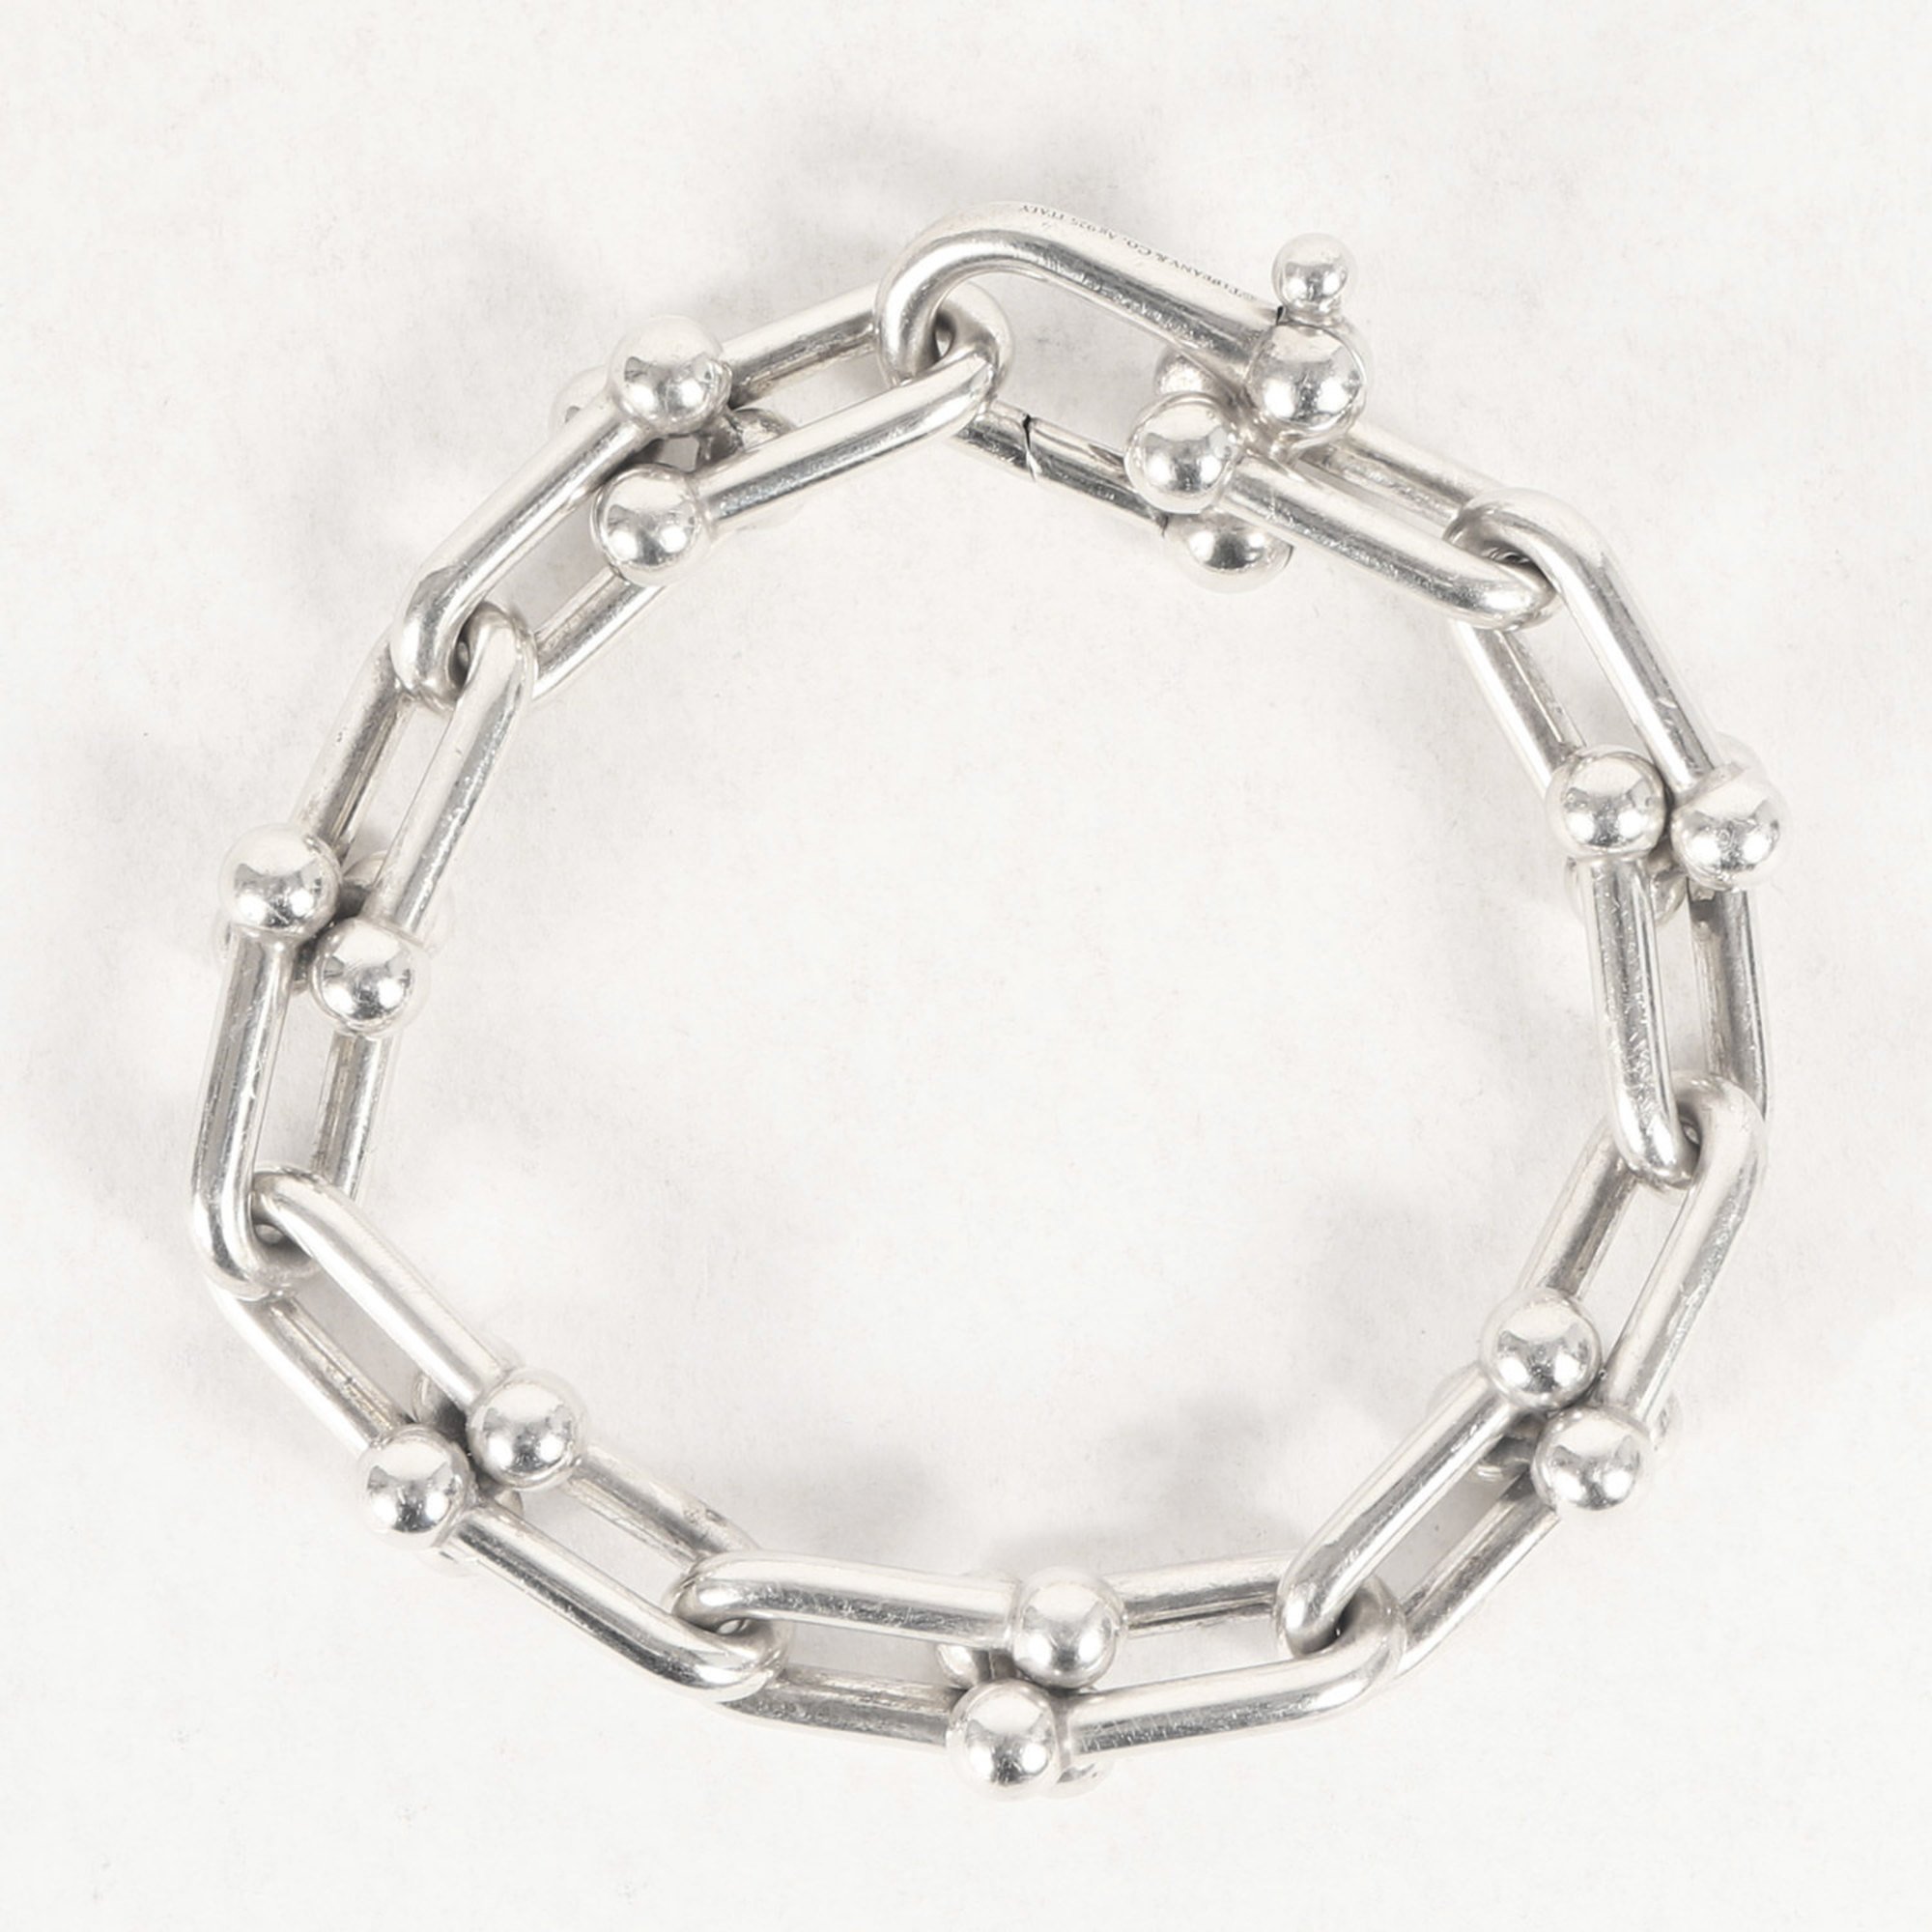 TIFFANY&Co. Tiffany Hardware Large Link Bracelet, 925 Silver Chain, Men's